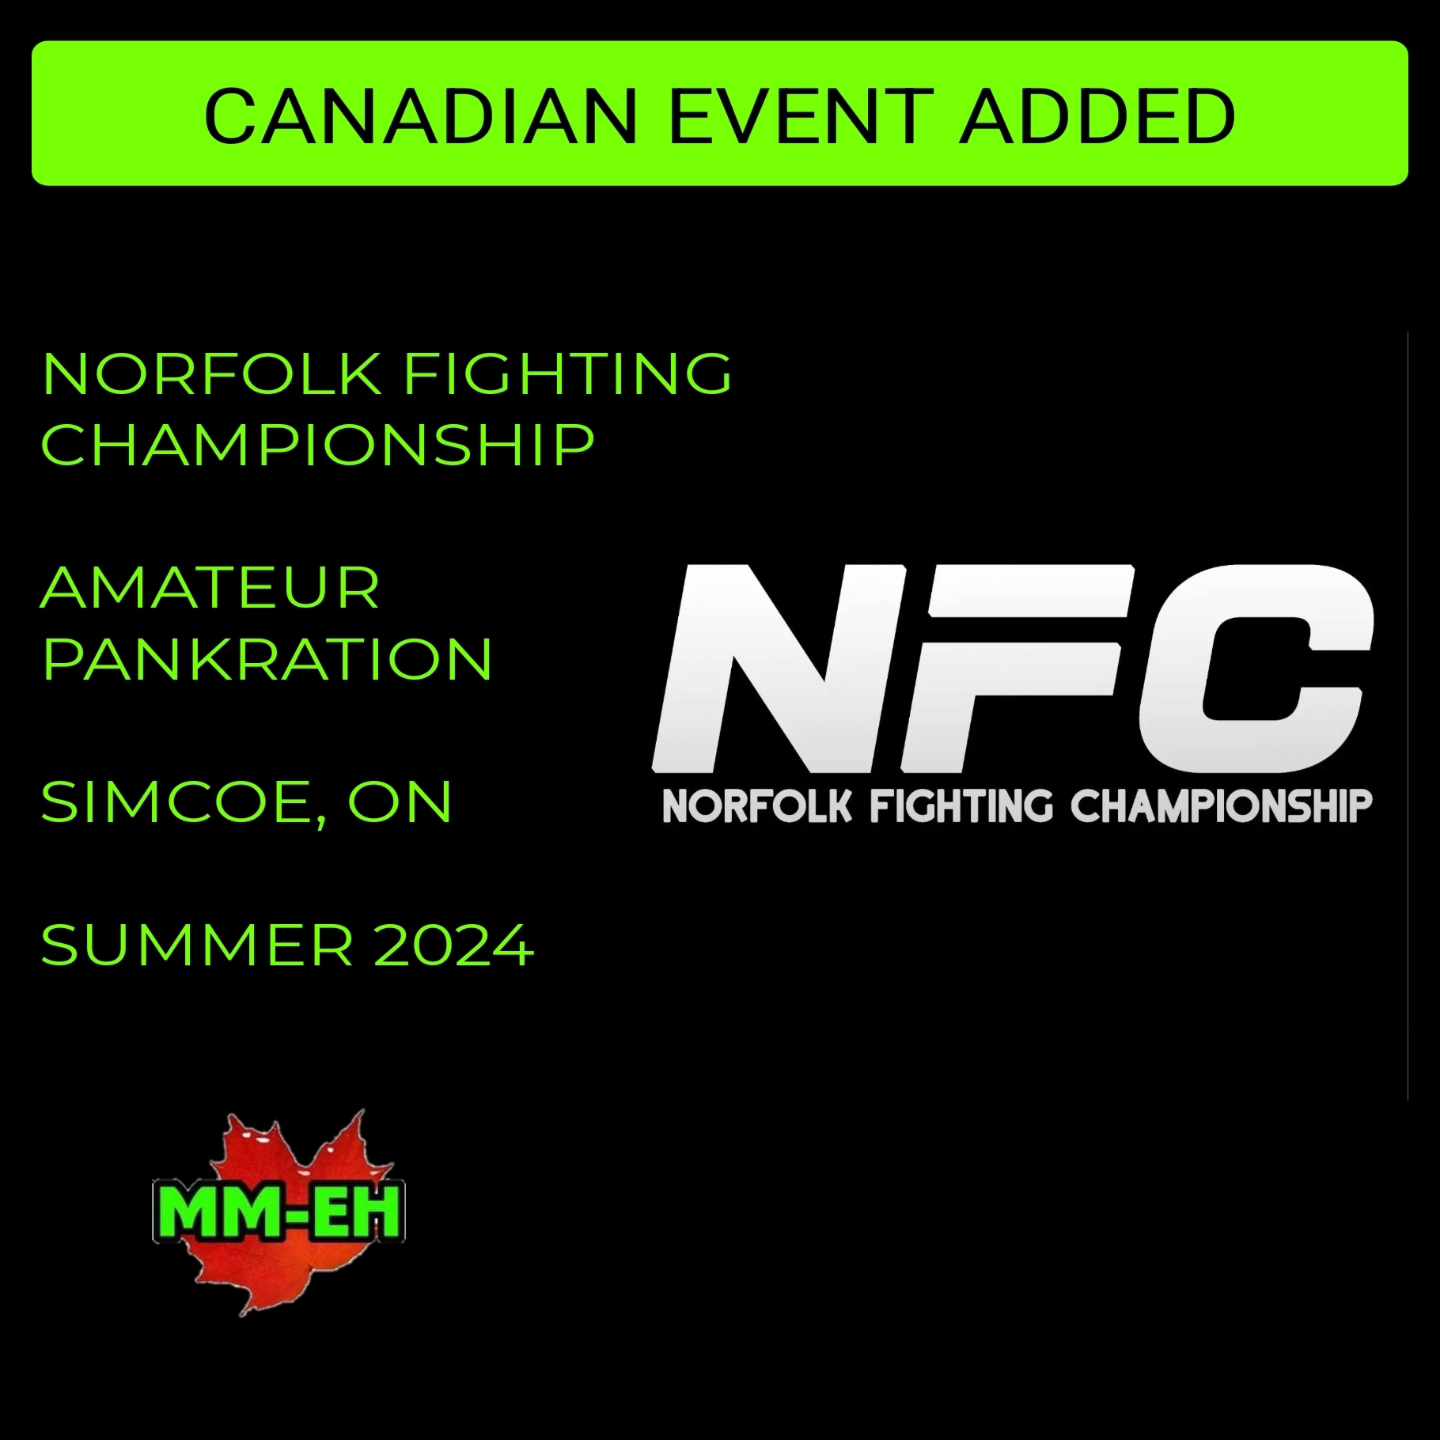 Norfolk Fighting Championship Bringing Amateur Pankration To Simcoe